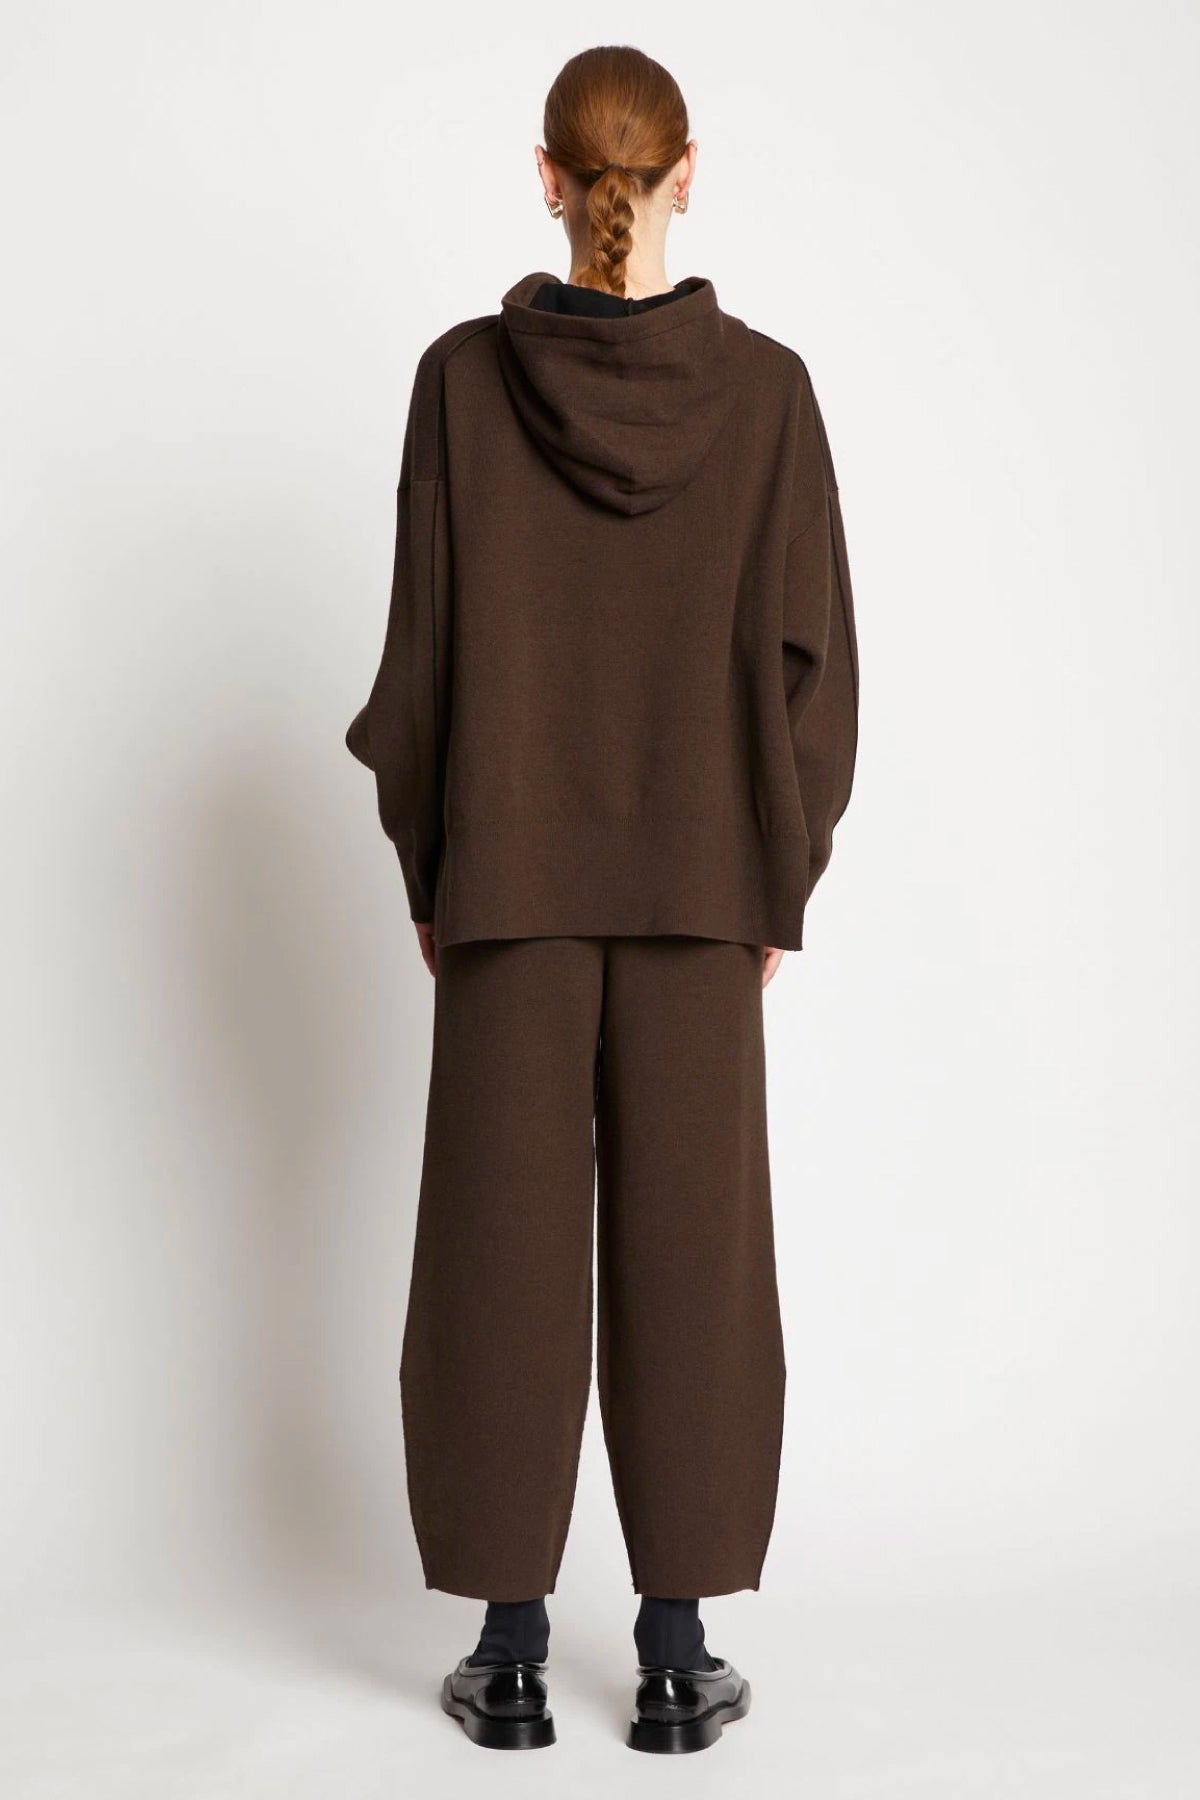 Proenza Schouler White Label Cashmere Blend Knit Sweatpants - Dark Brown/ Black